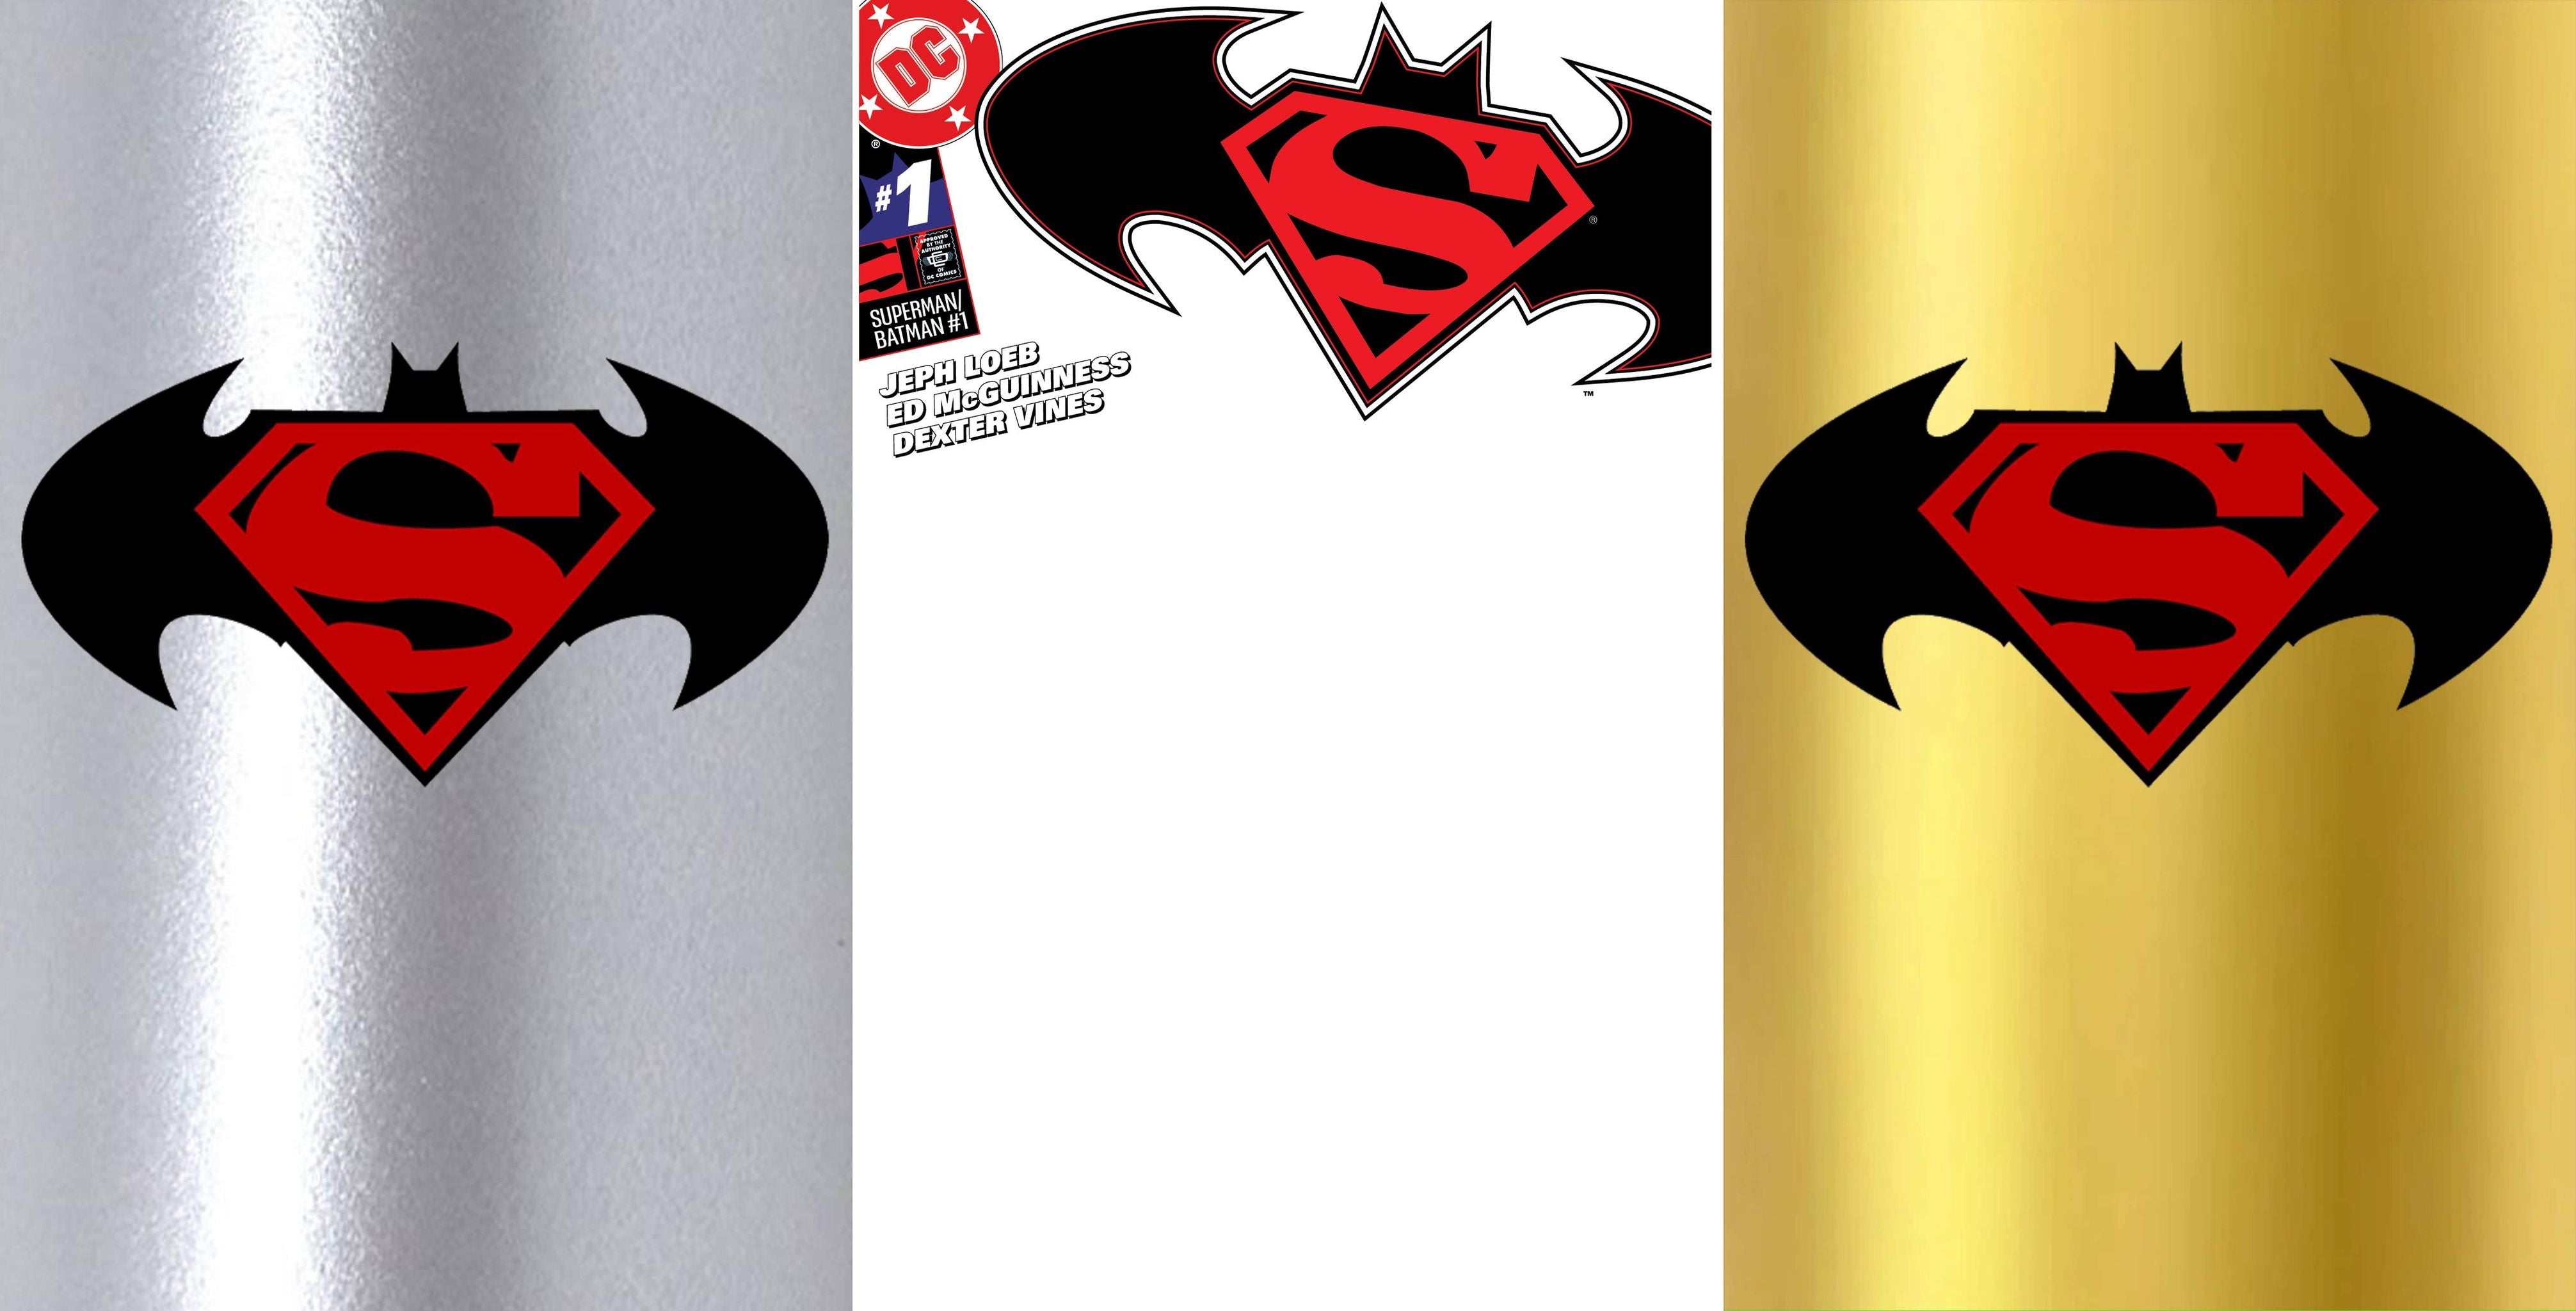 SUPERMAN BATMAN #1 SPECIAL EDITION NYCC SILVER FOIL VARIANT OPTIONS